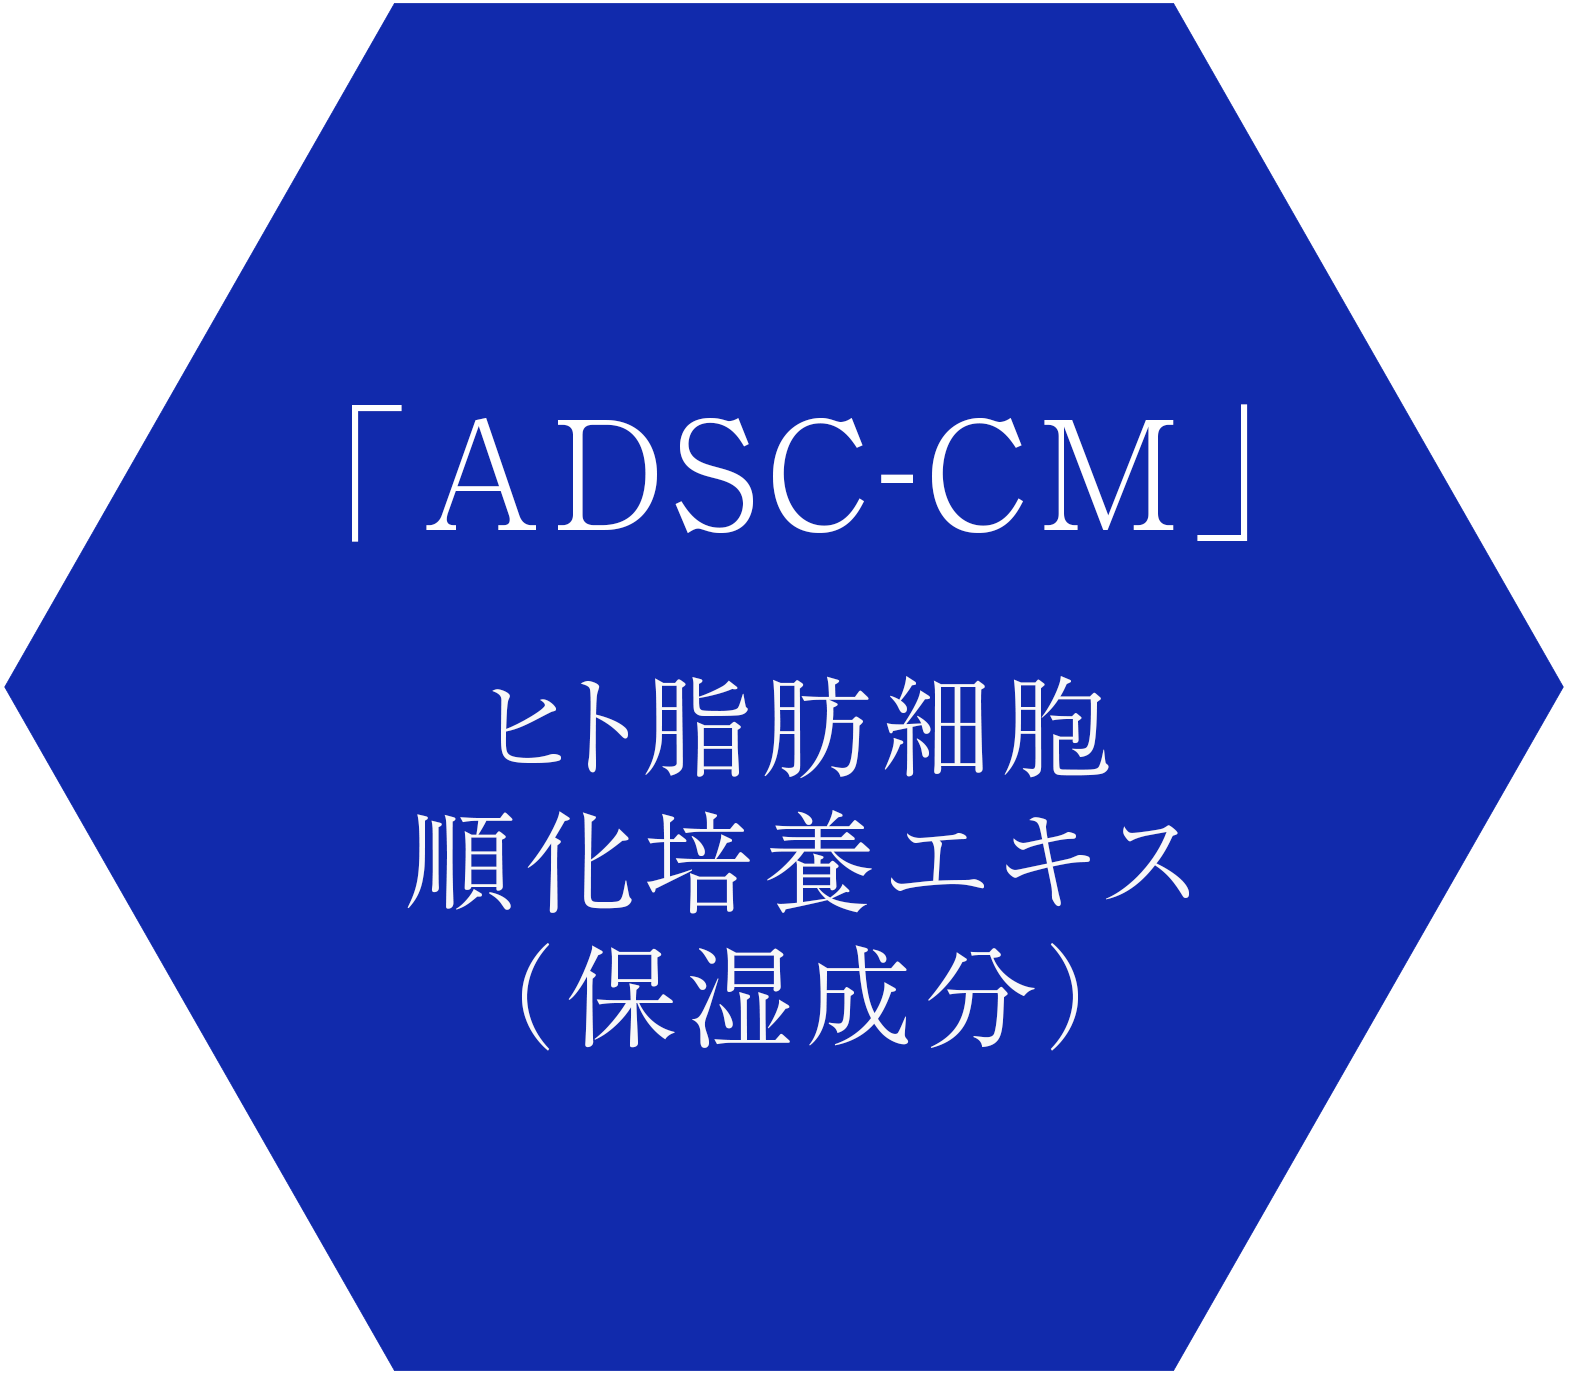 ADSCCMイメージ画像